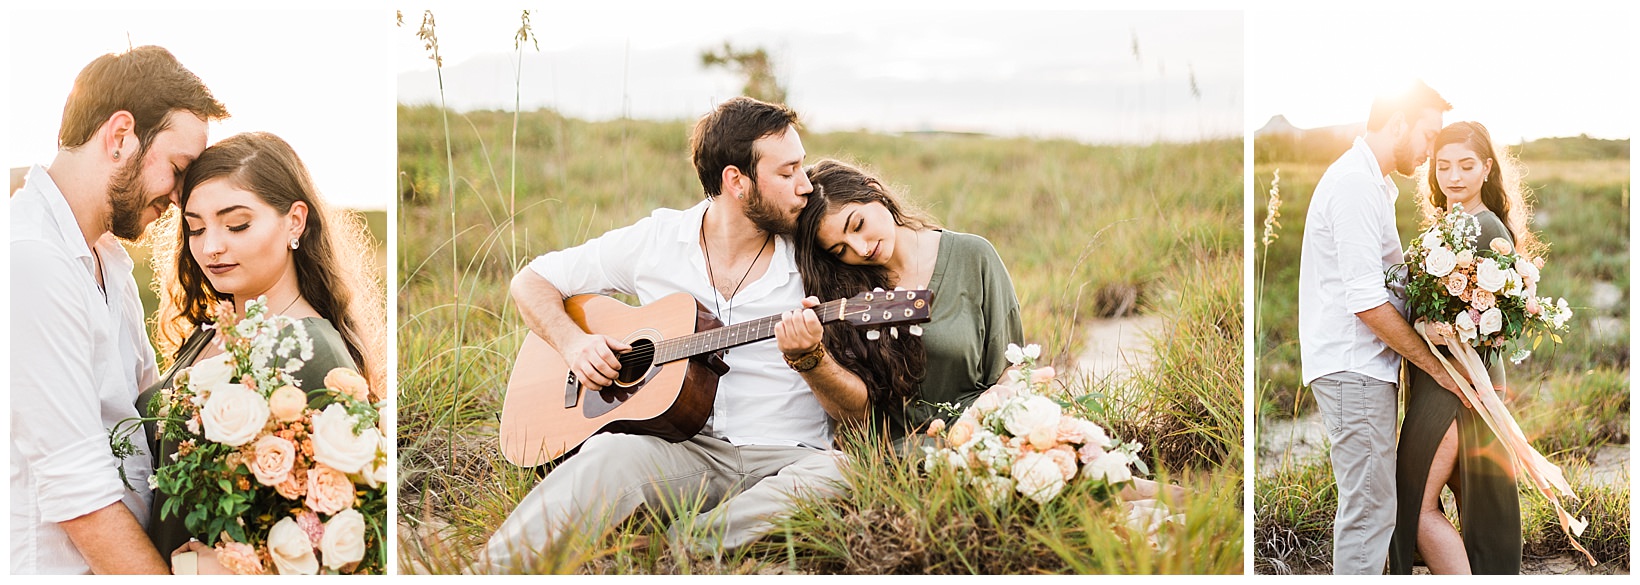 Virginia beach elopement photographer couple inspiration posing with guitar, musical elopement